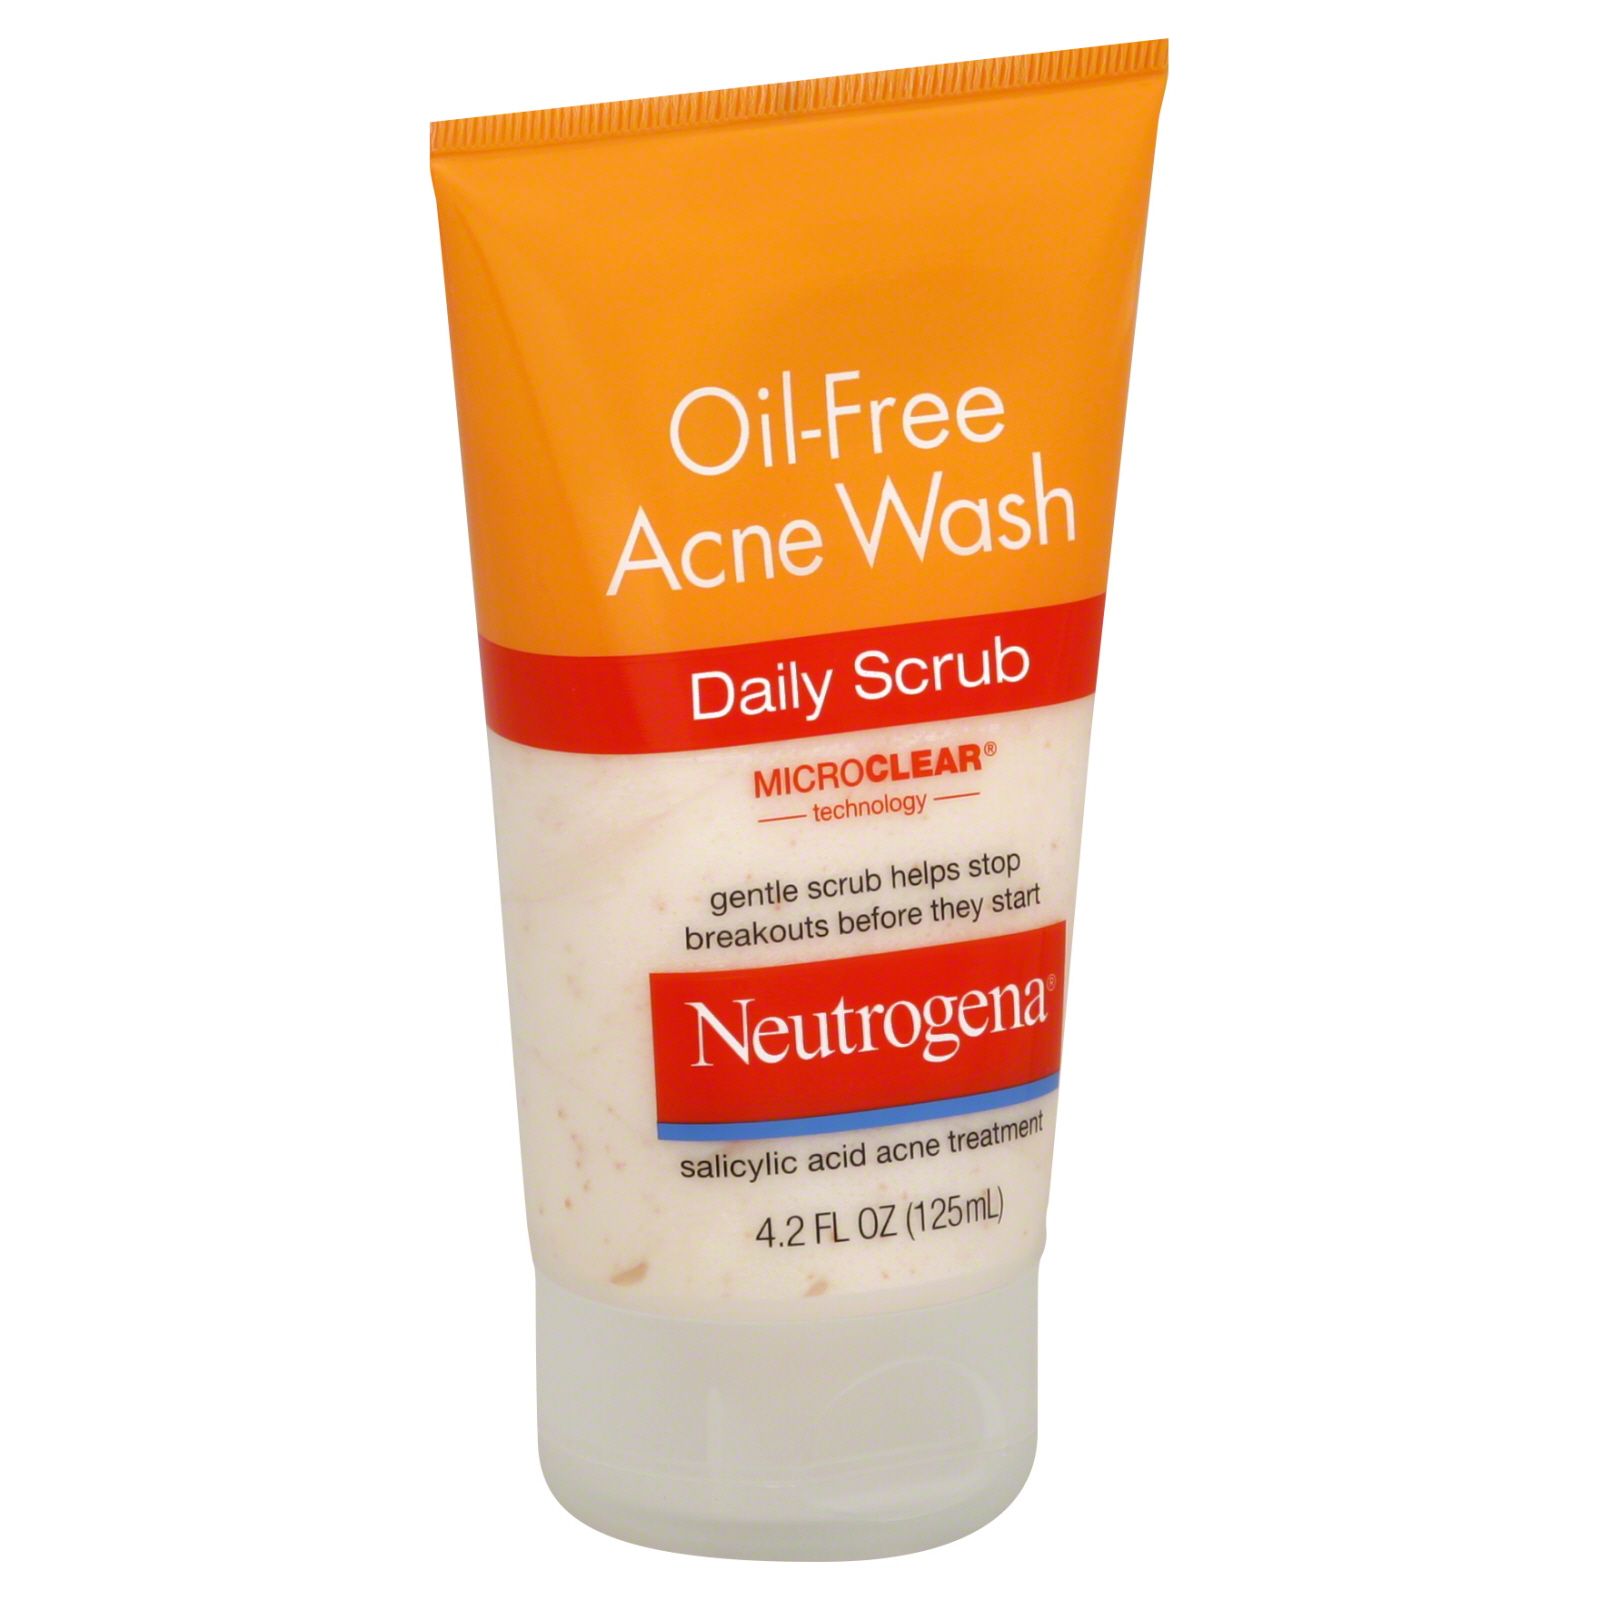 Neutrogena Oil-Free Acne Wash Daily Scrub - 4.2 Fluid Ounce